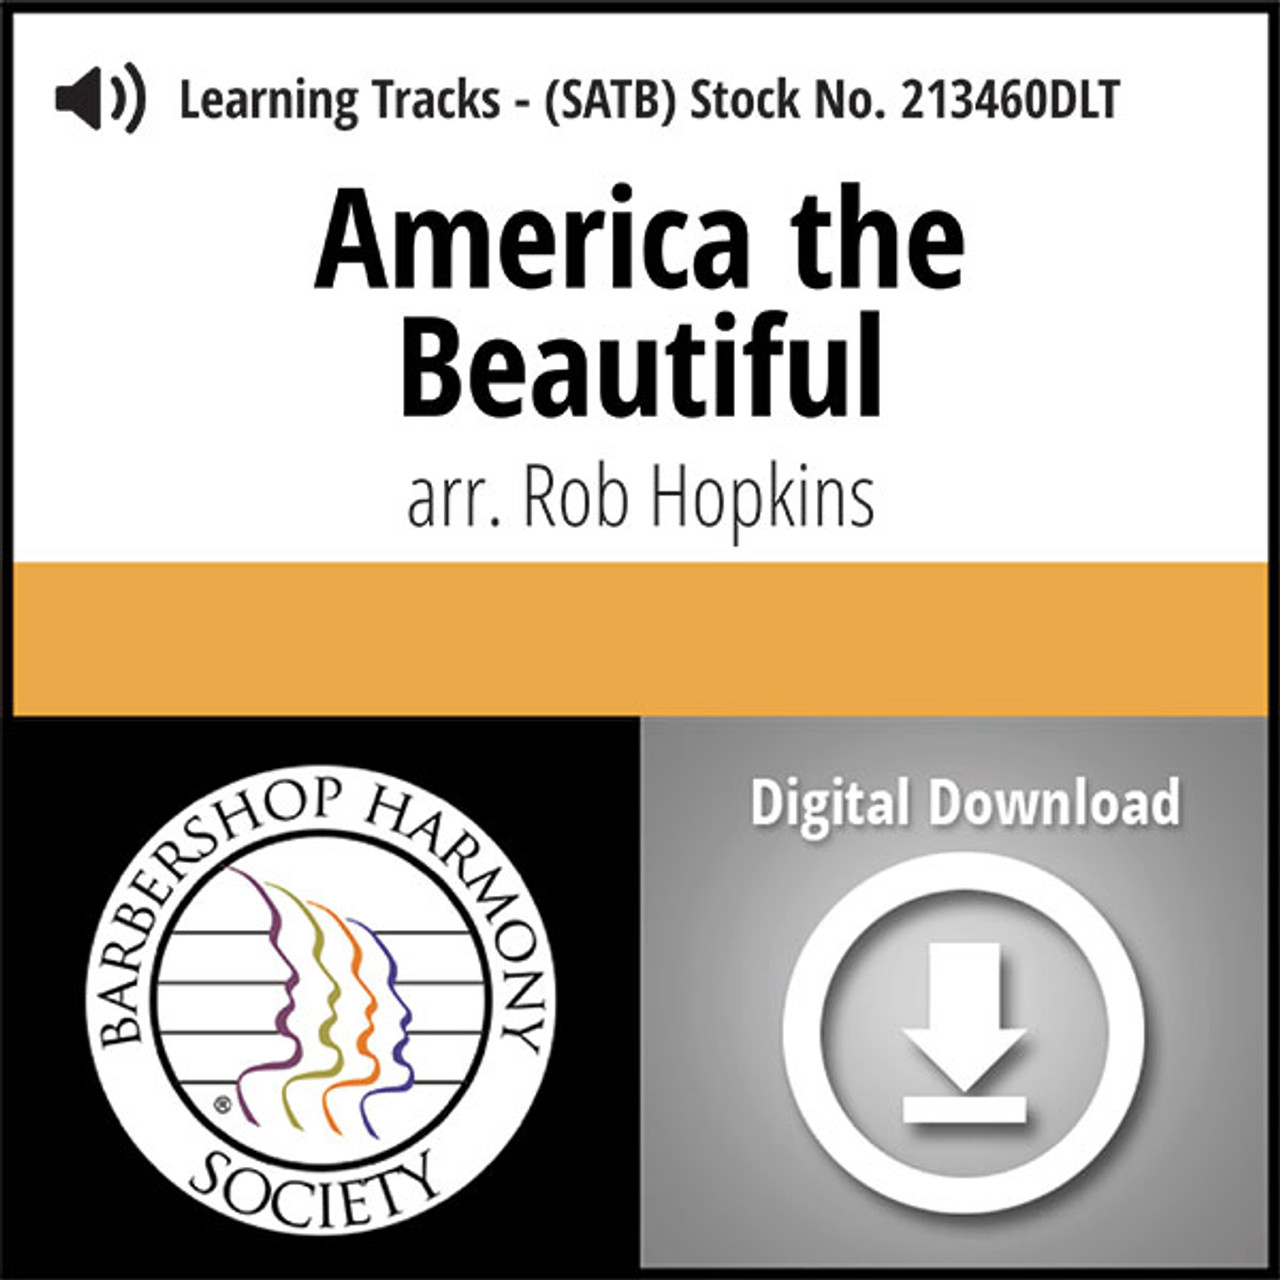 America the Beautiful (SATB) (arr. Hopkins) - Digital Tracks for 213459